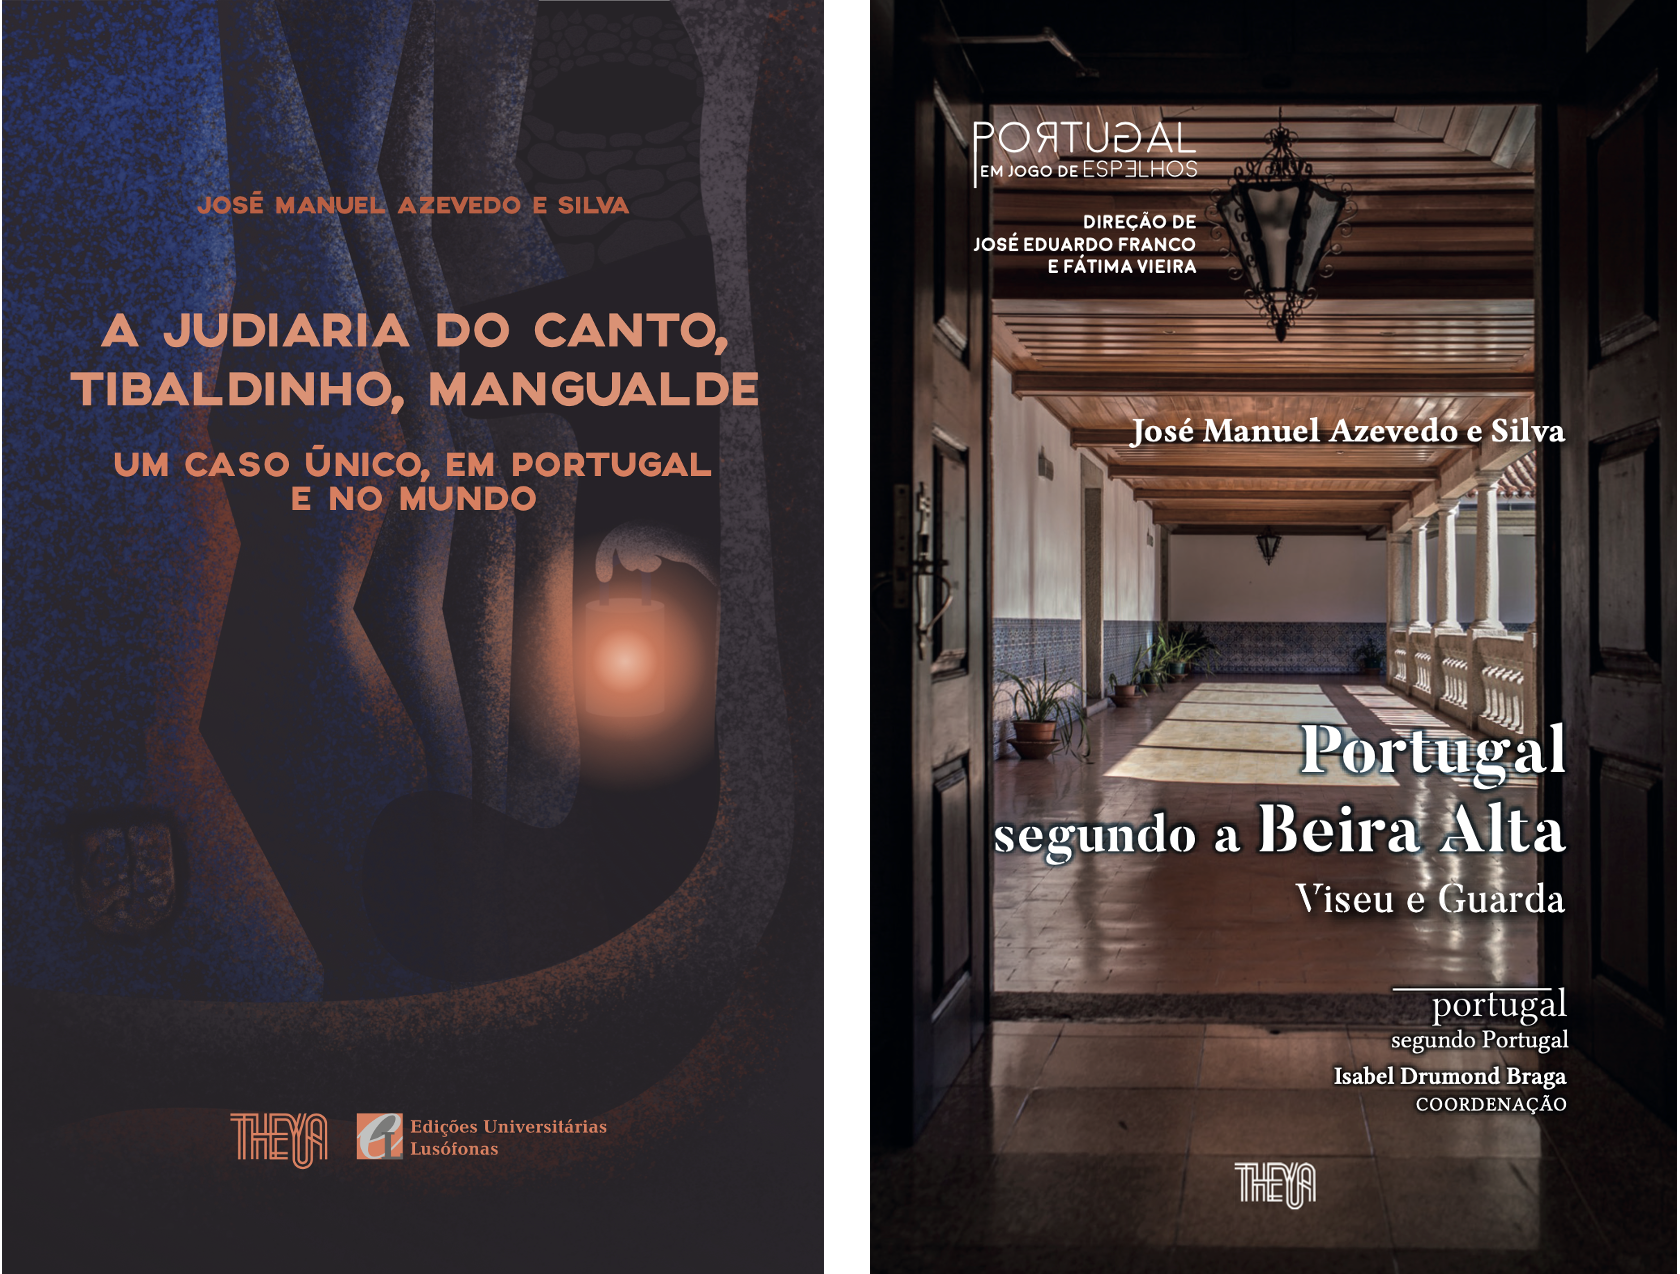 Publication of two books by José Manuel Azevedo e Silva